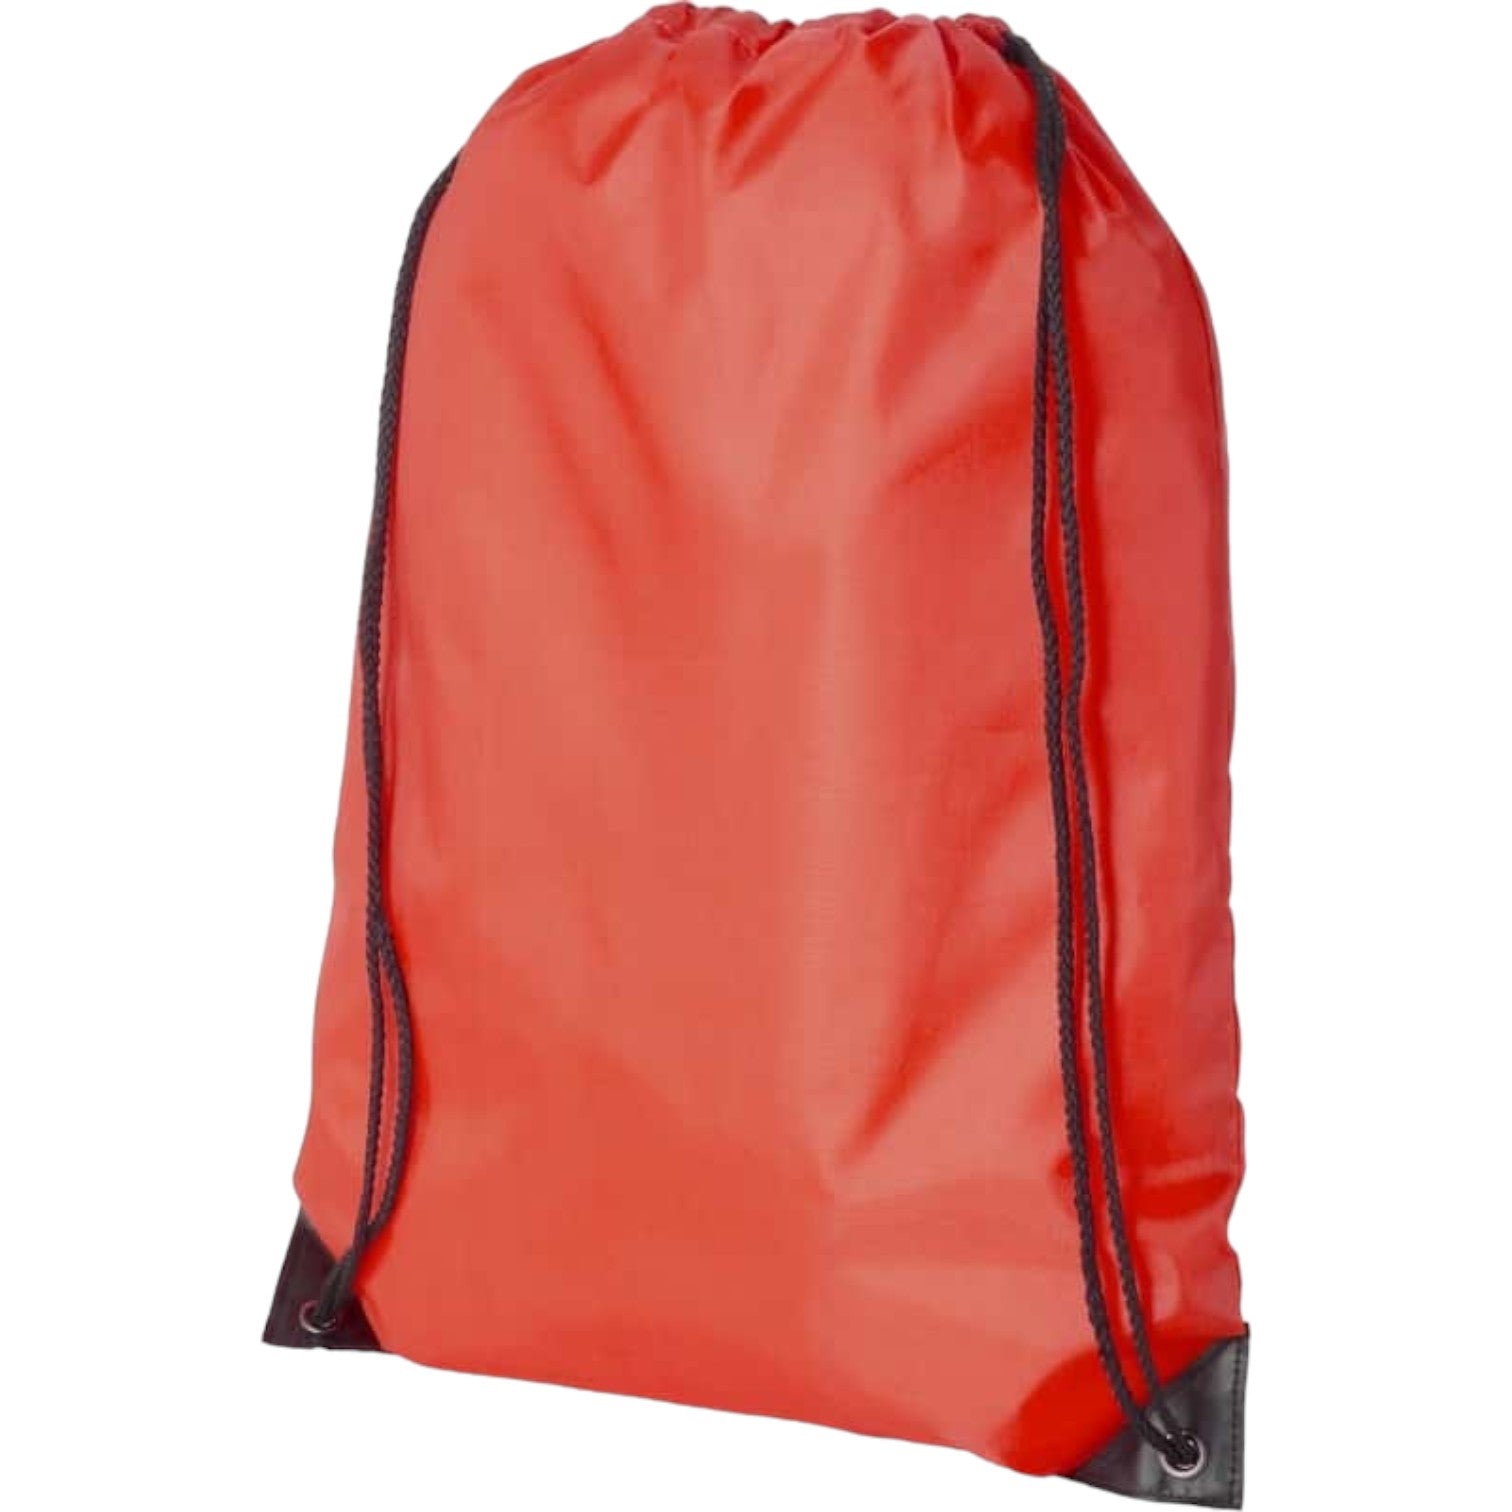 210D Polyster Drawstring Bag - Red